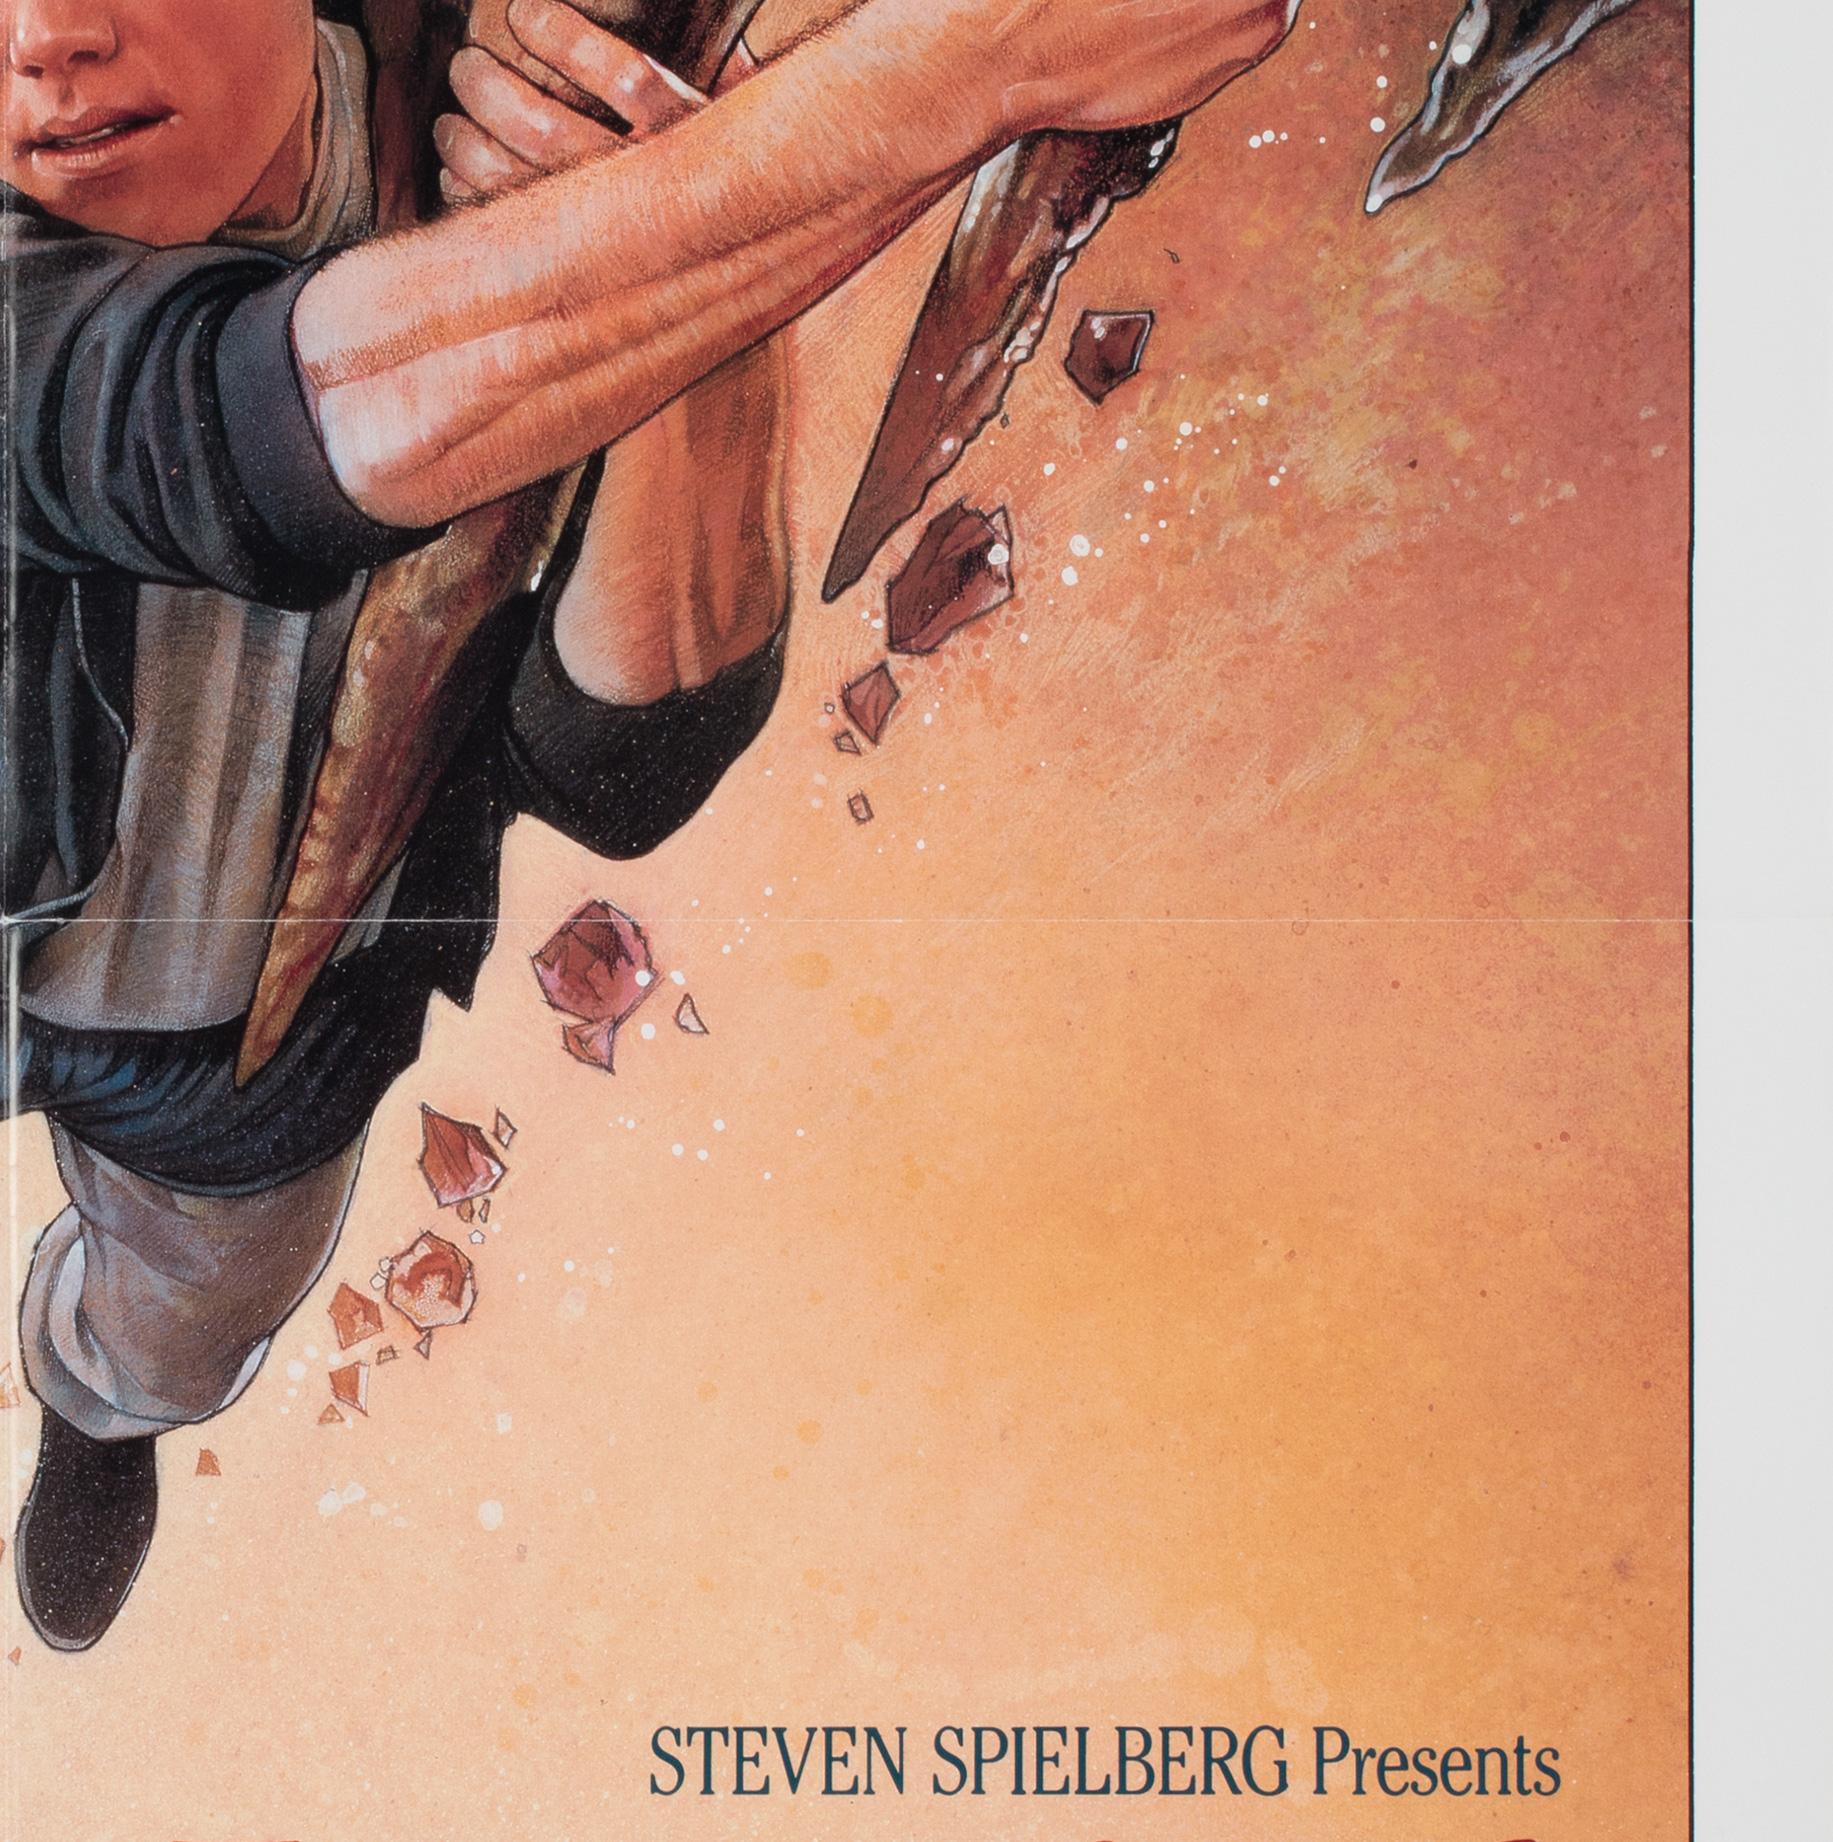 Linen The Goonies 1985 US 1 Sheet Film Movie Poster, DREW STRUZAN For Sale